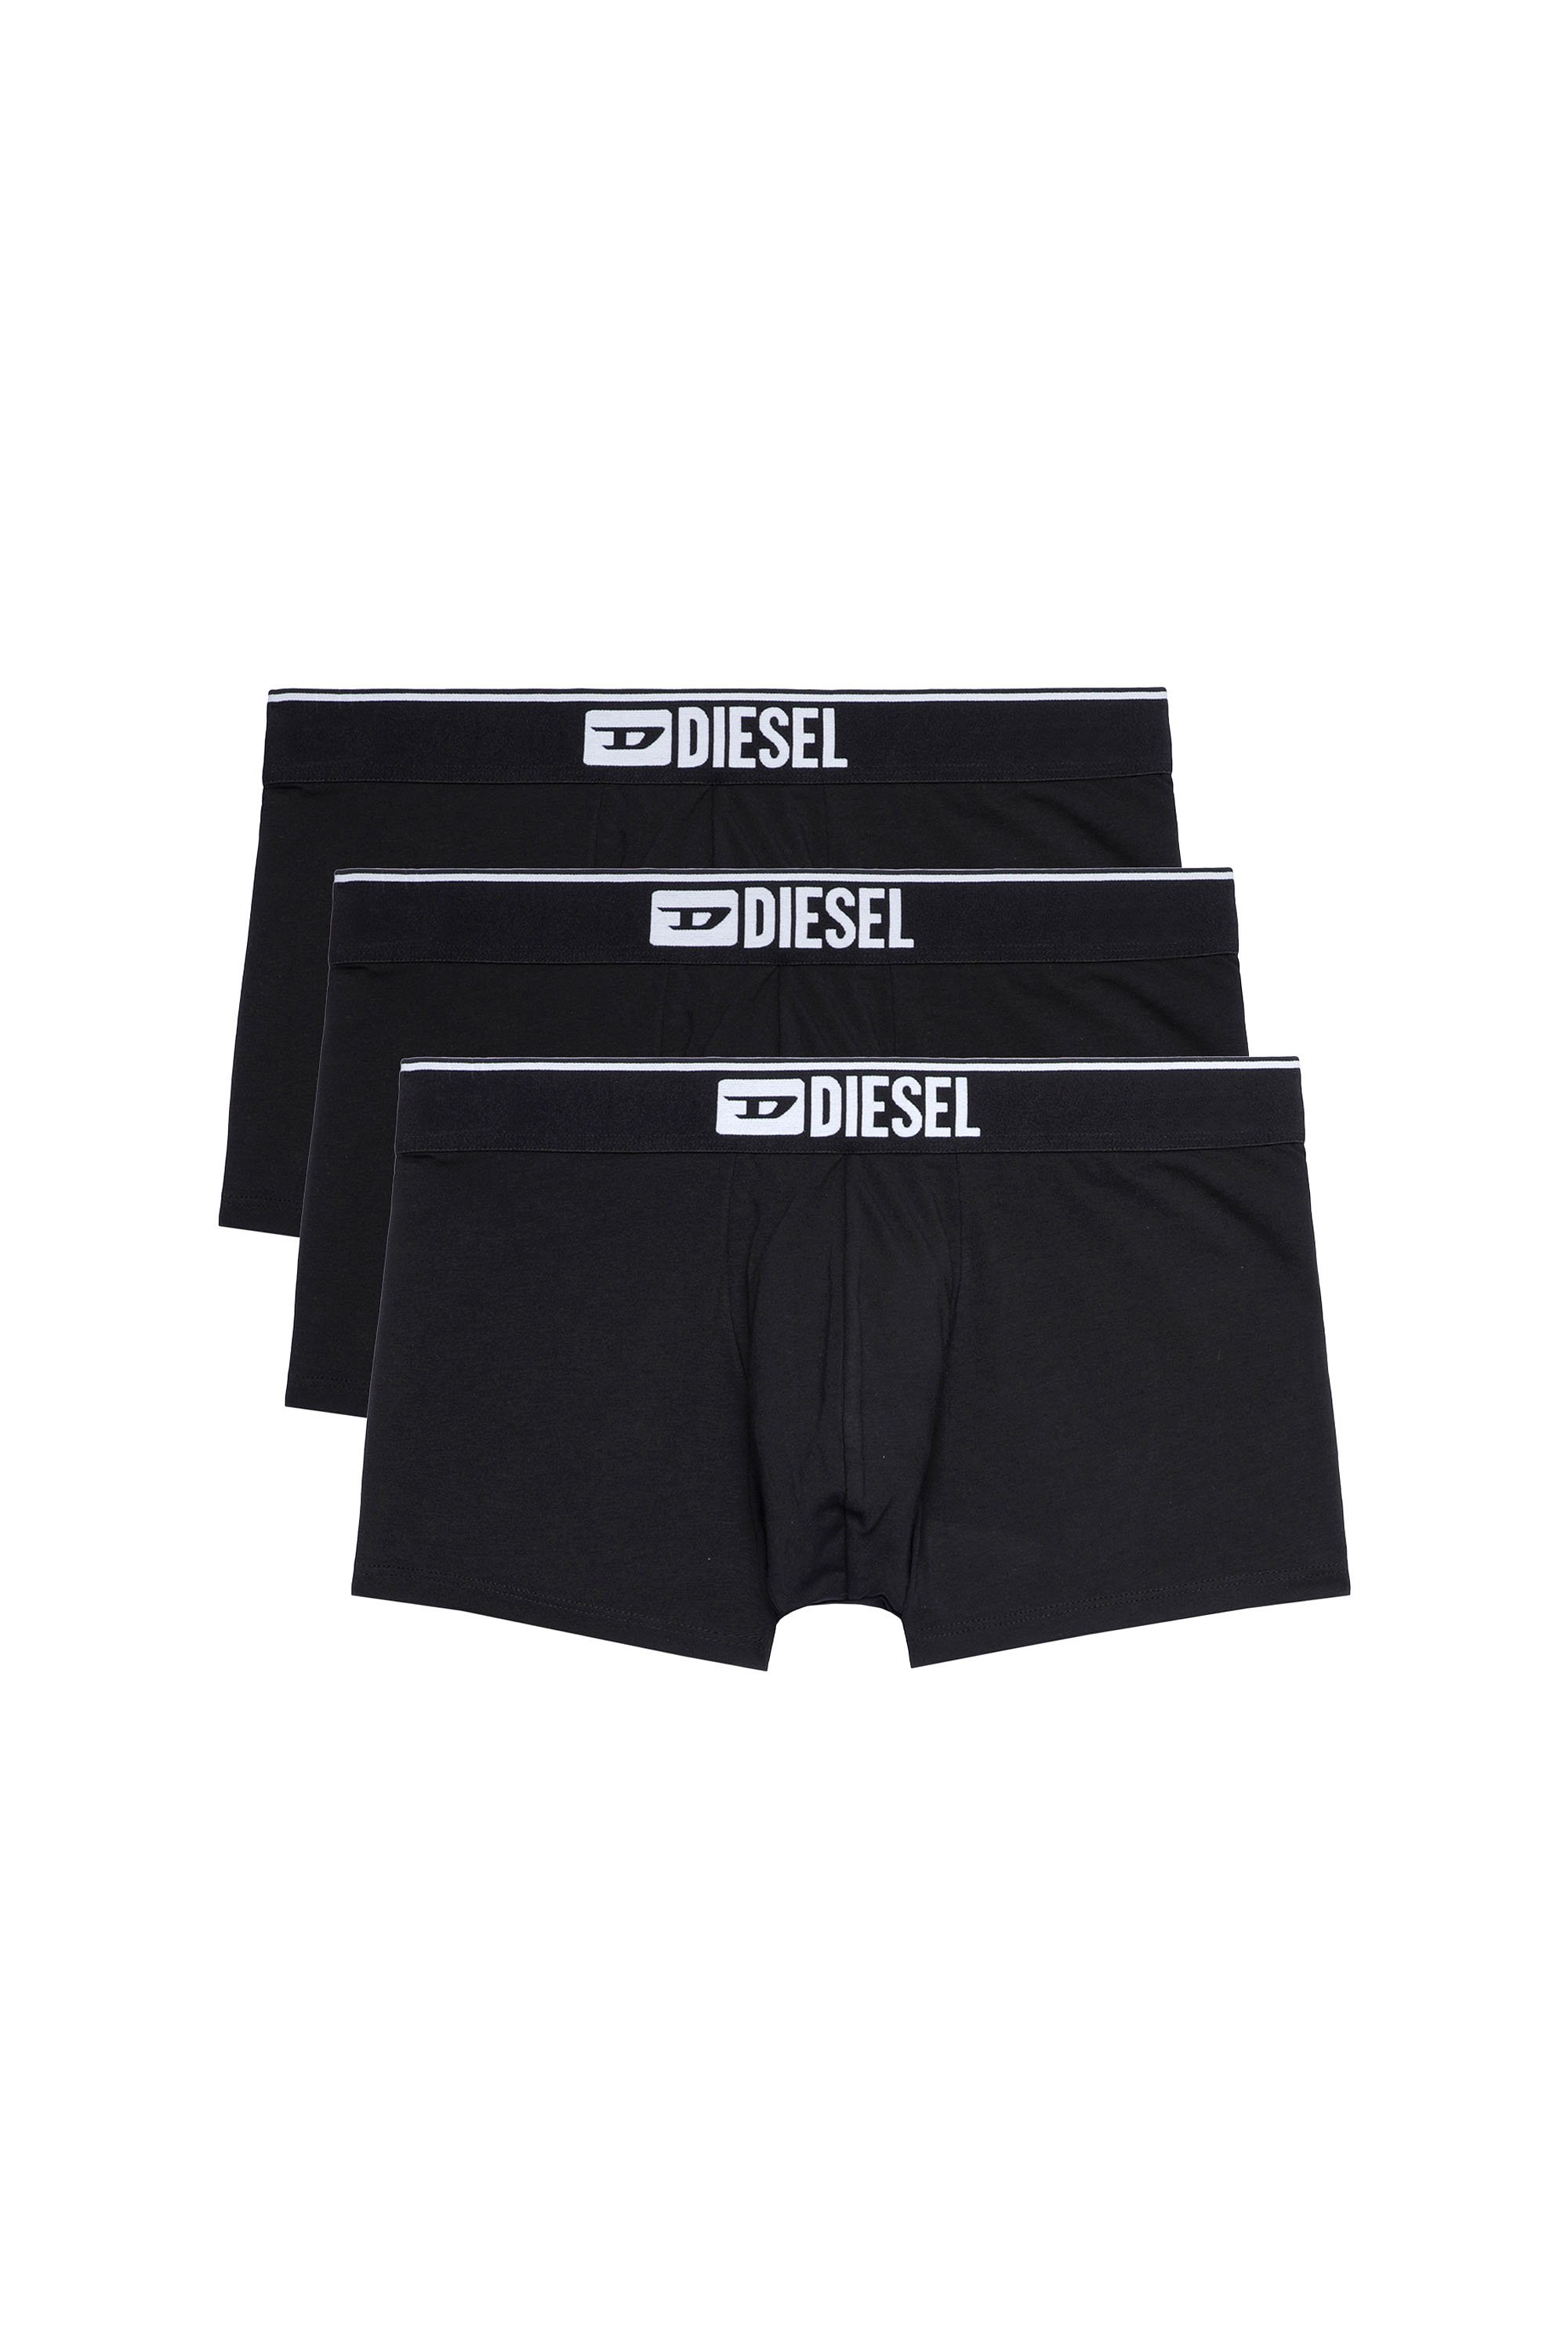 q-Diesel Mens Underwear - Fall - Winter 2022/23